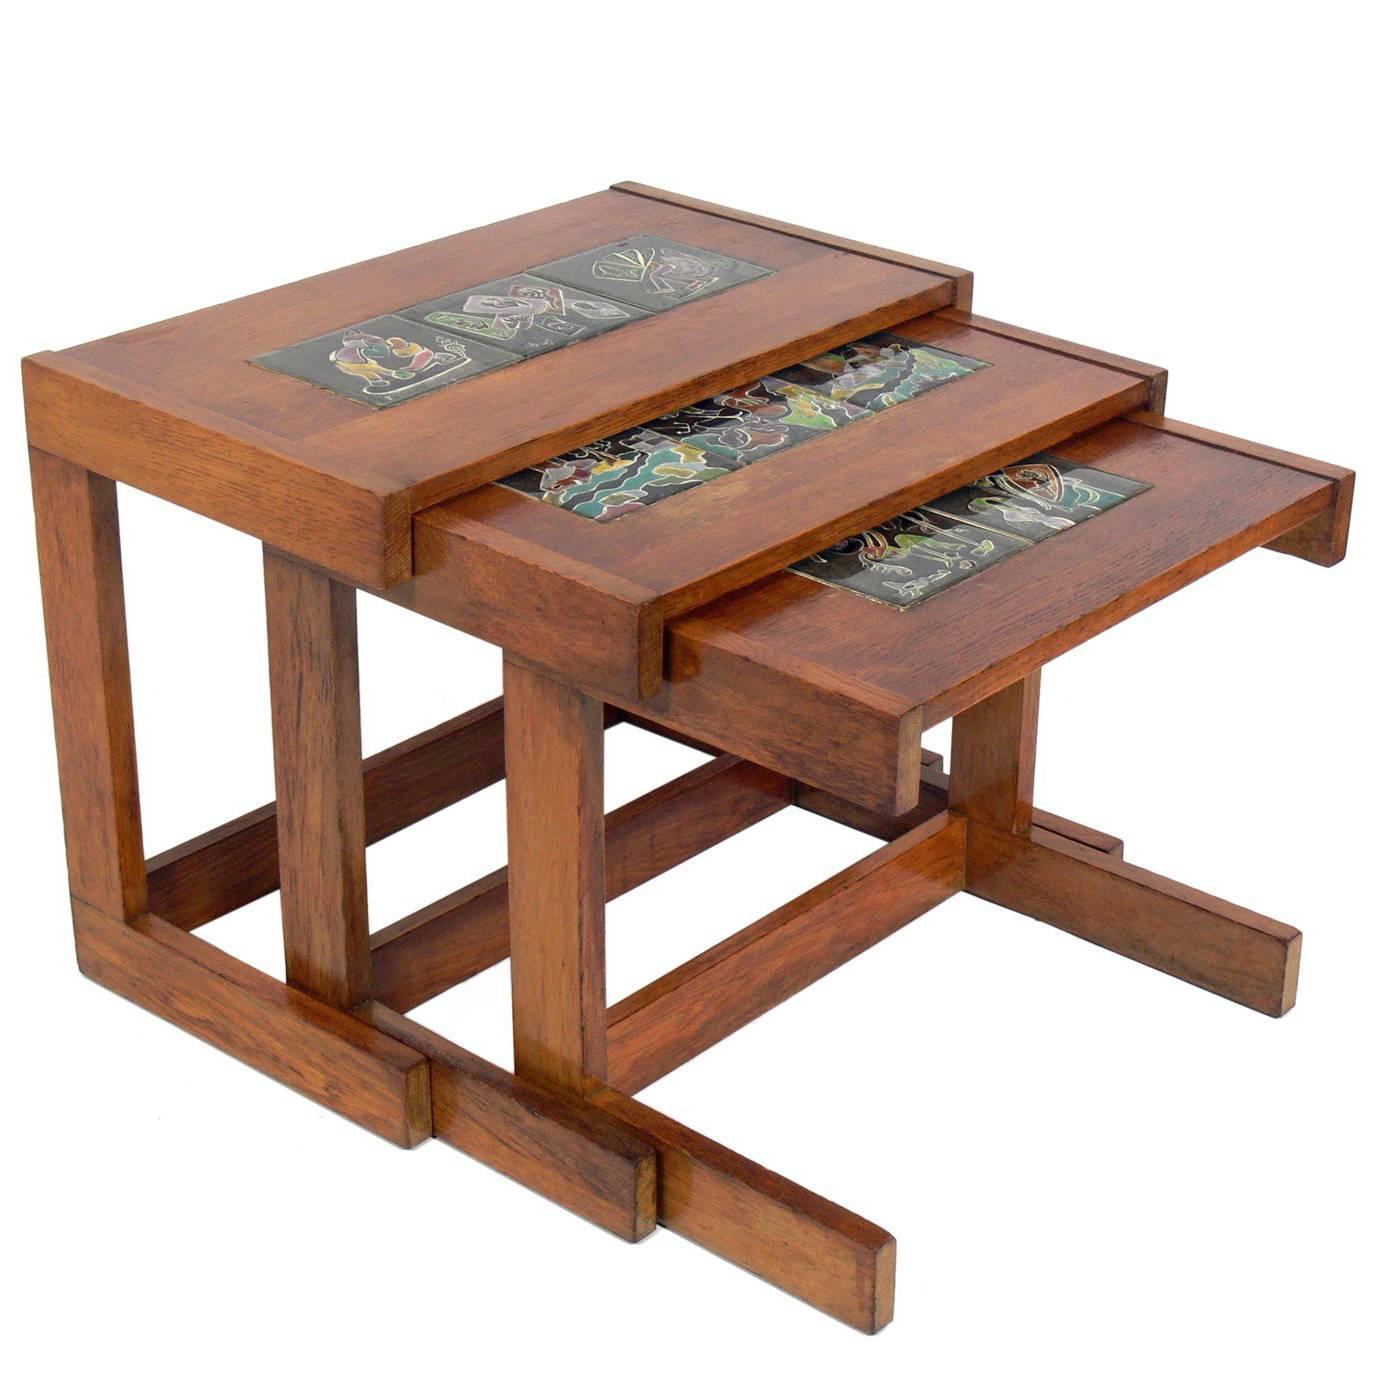 Vladimir Kagan and J. Warner Prins Inlaid Tile Nesting Tables